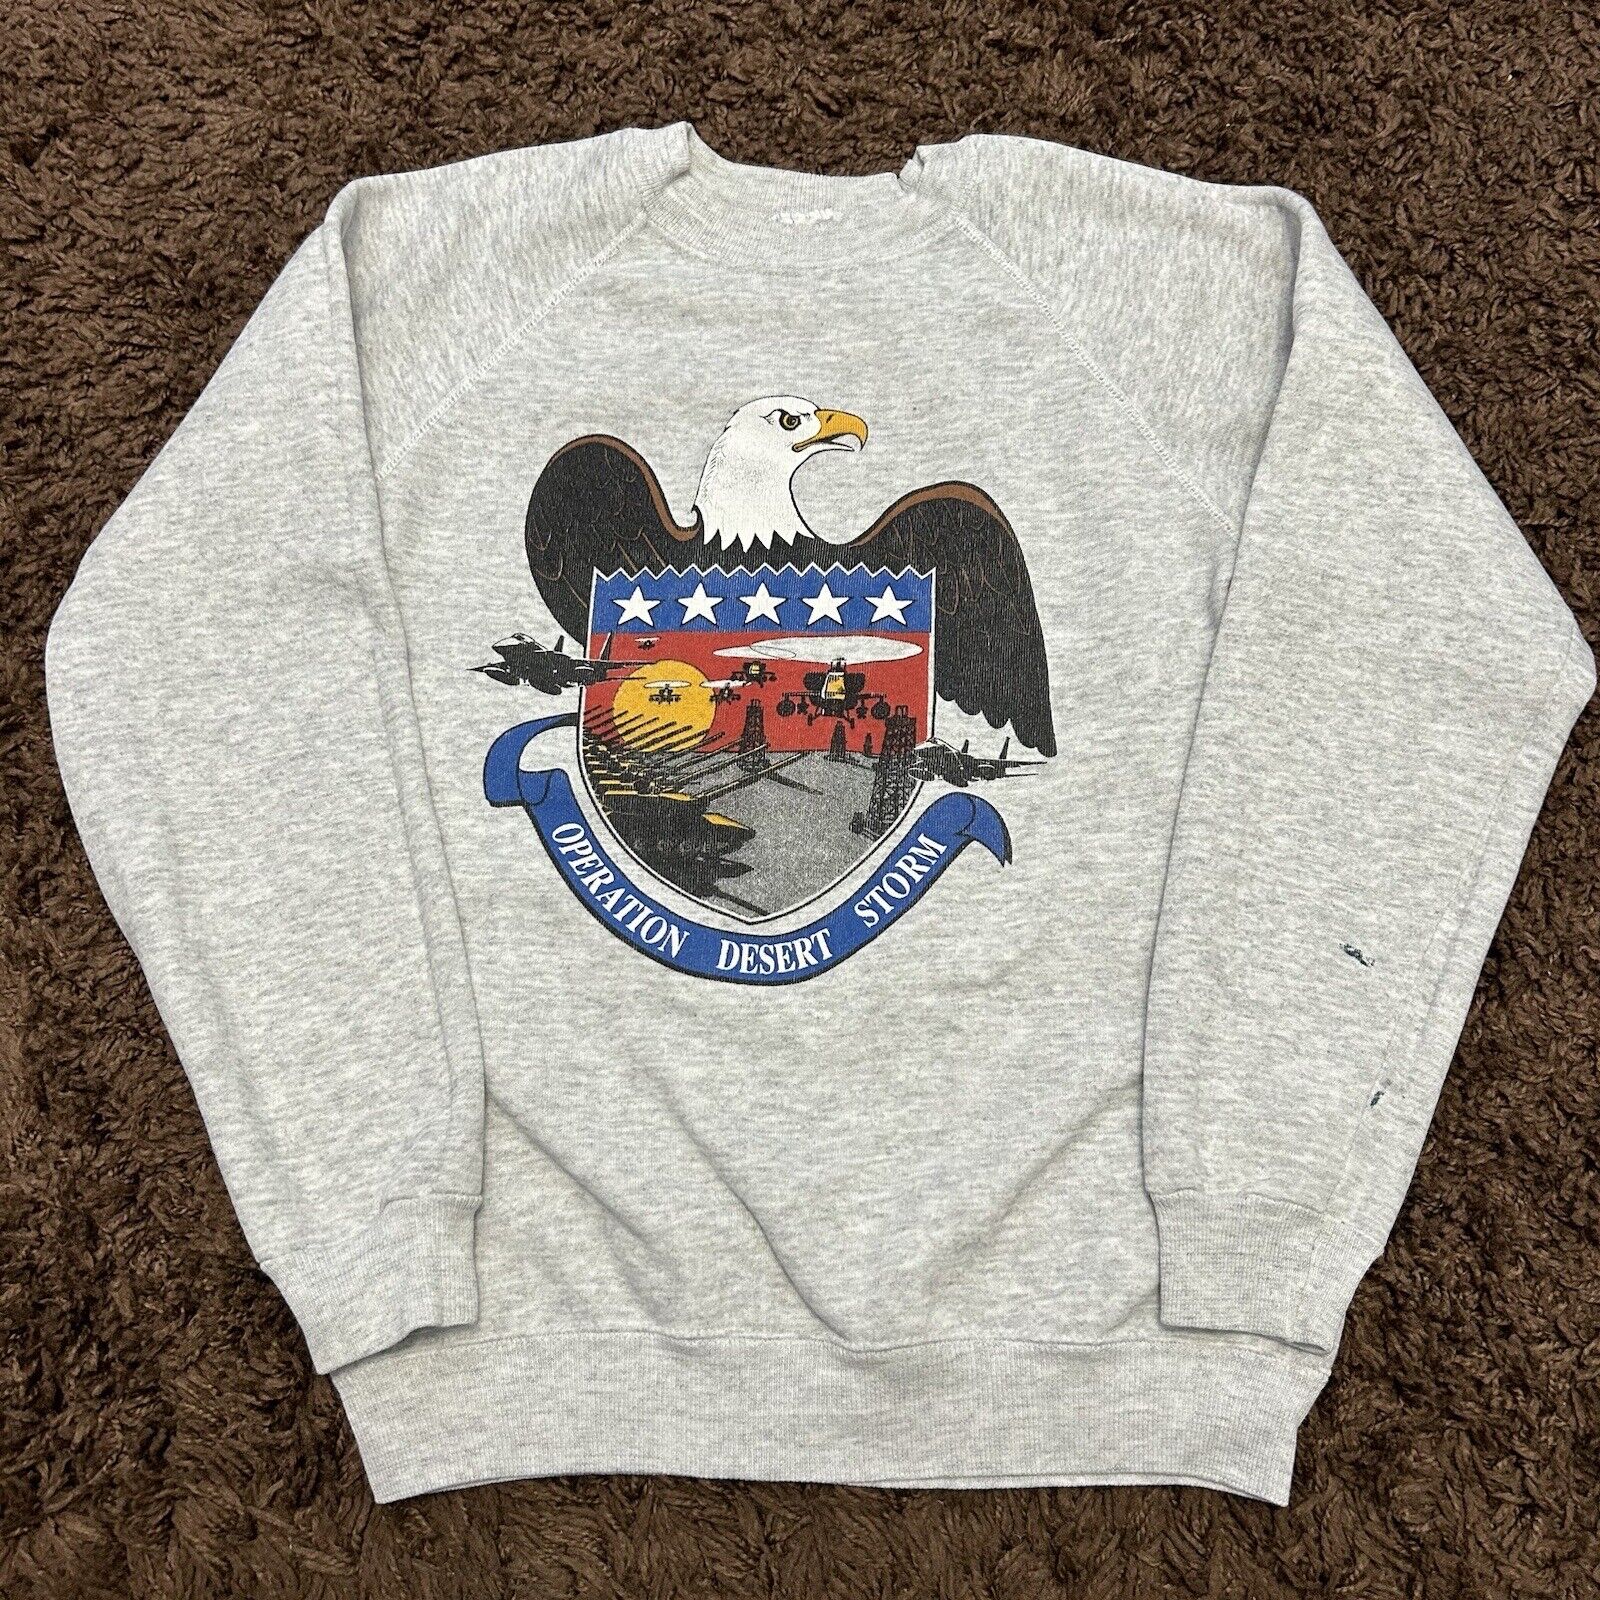 Vintage 1980s Operation Desert Storm Gray Crewneck Sweatshirt Size Small Rare